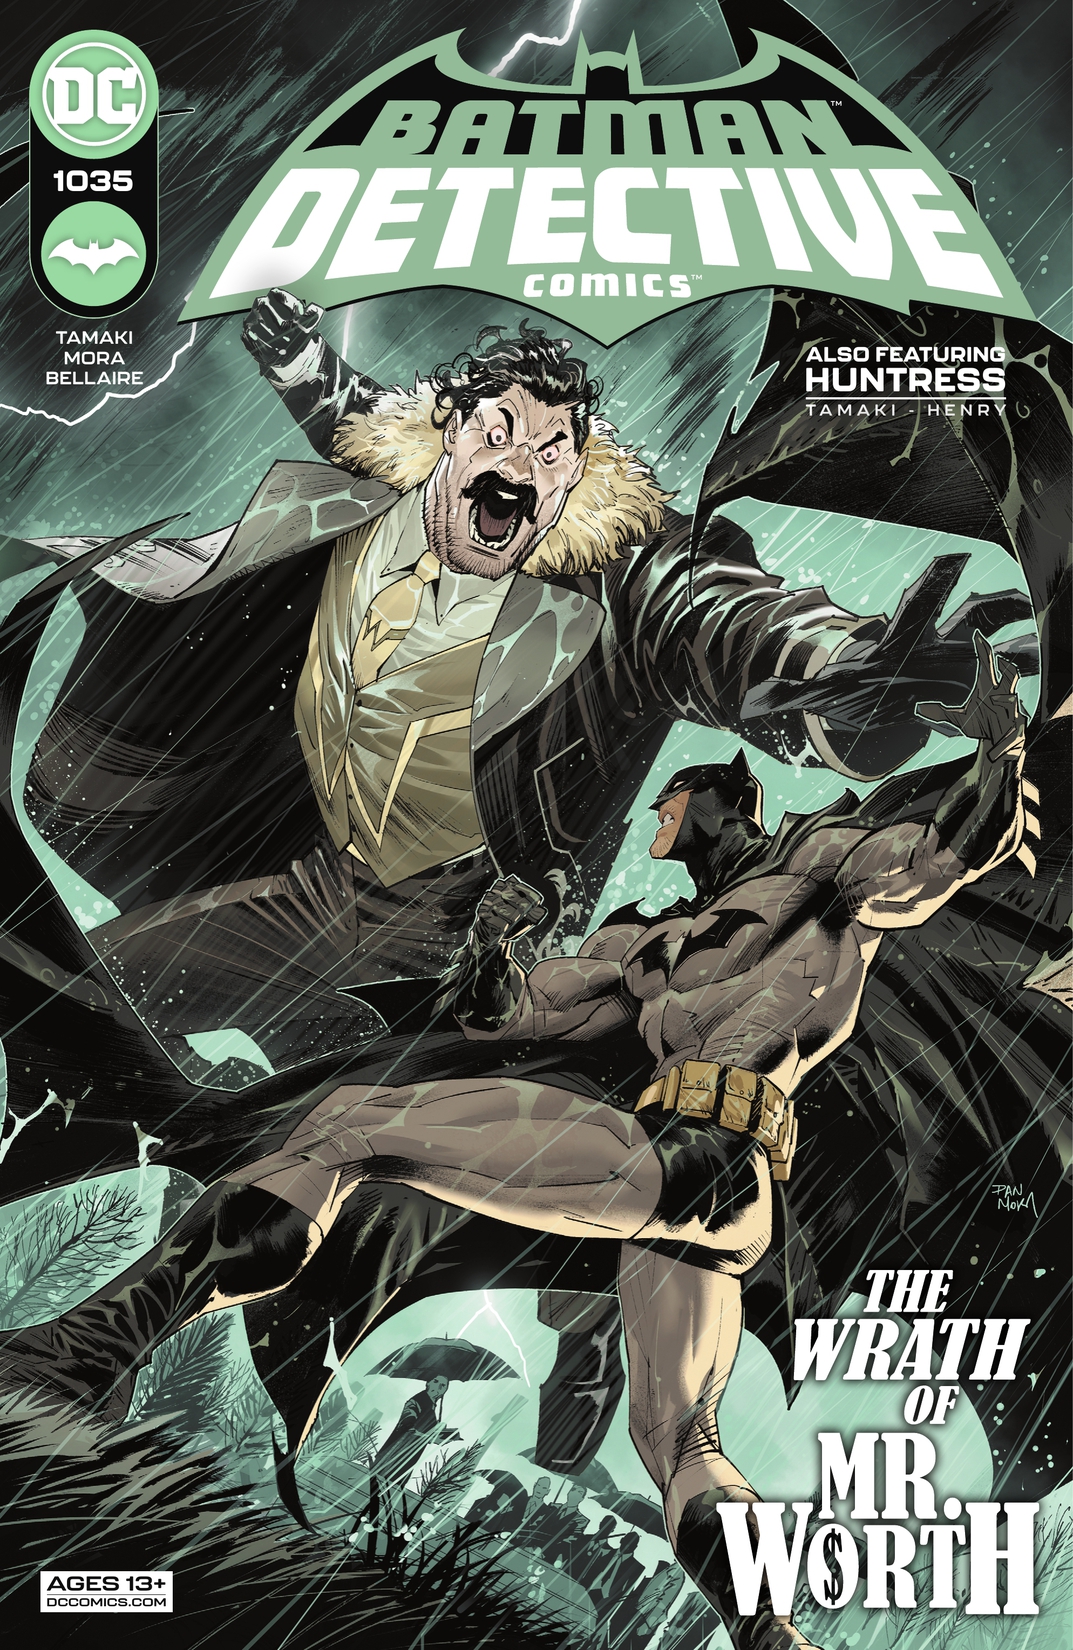 Detective Comics (2016-) #1035 preview images